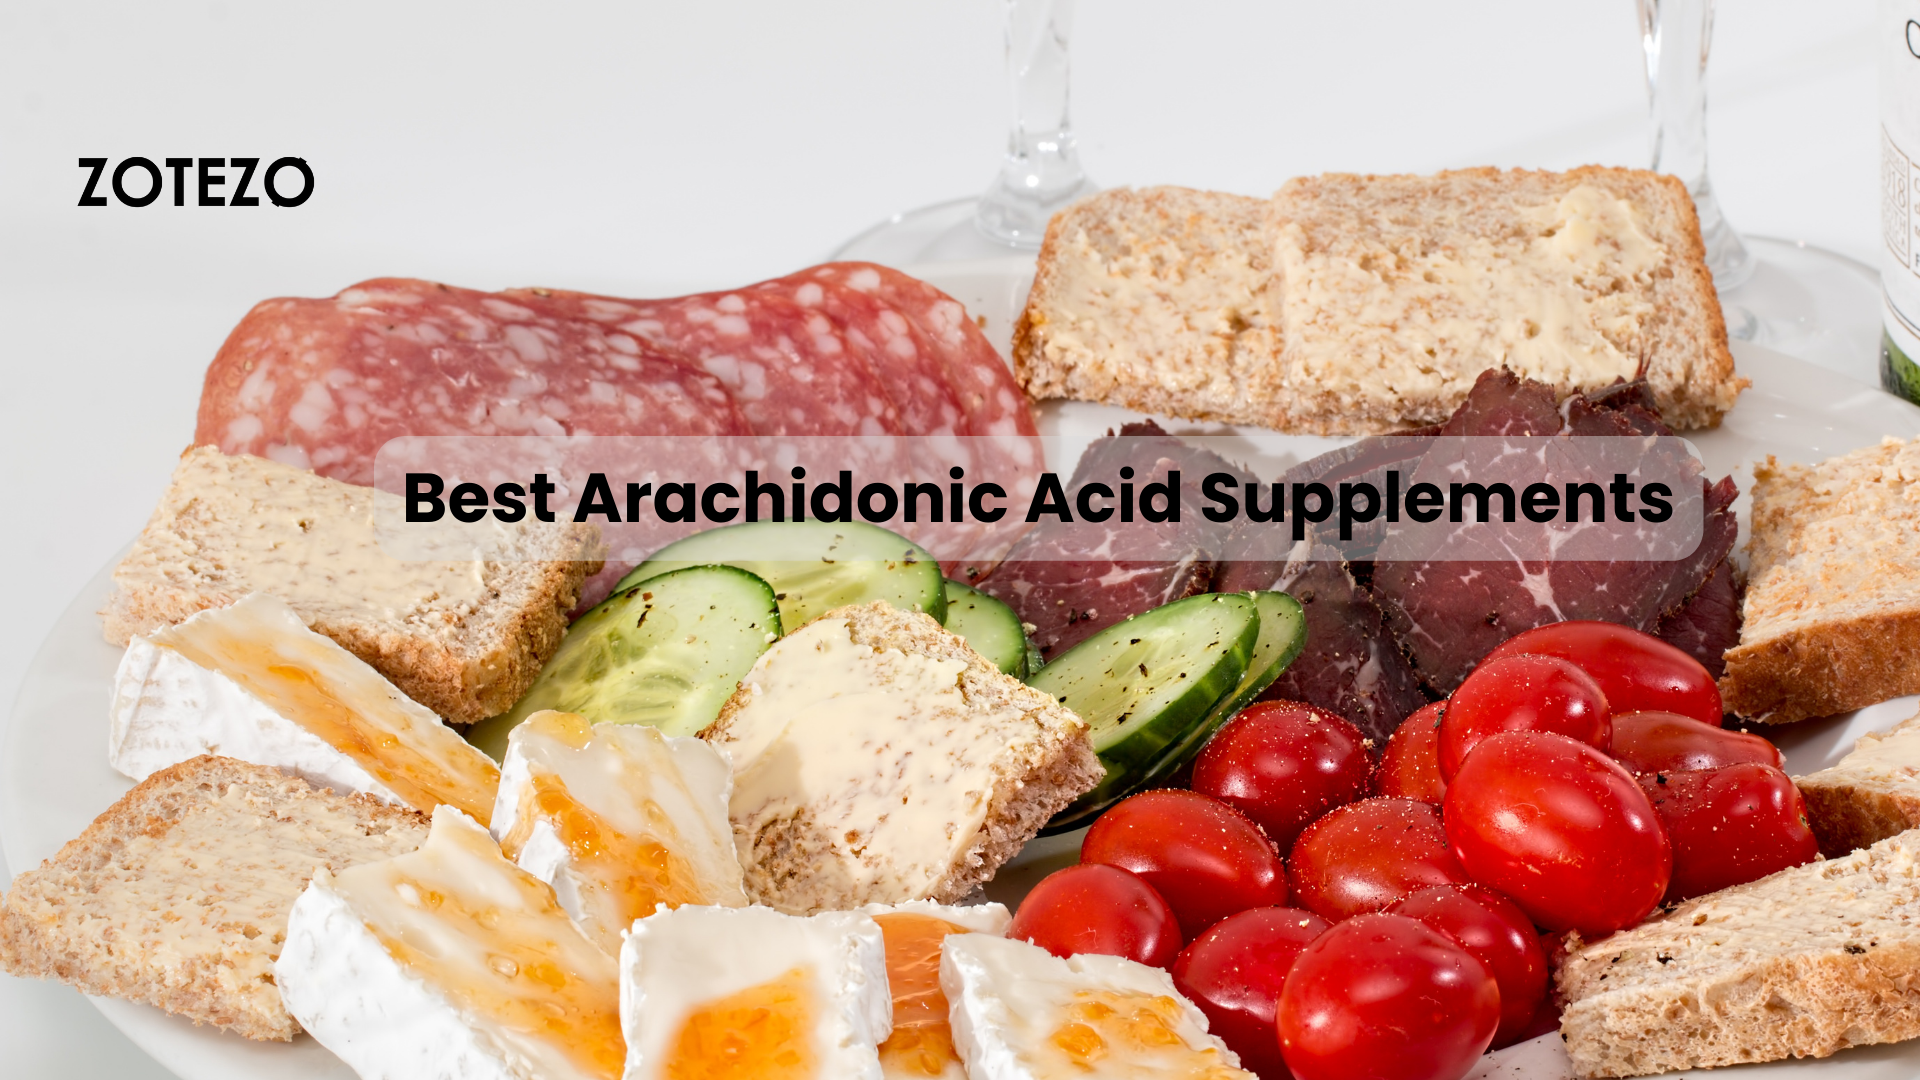 Arachidonic Acid Supplements in the World